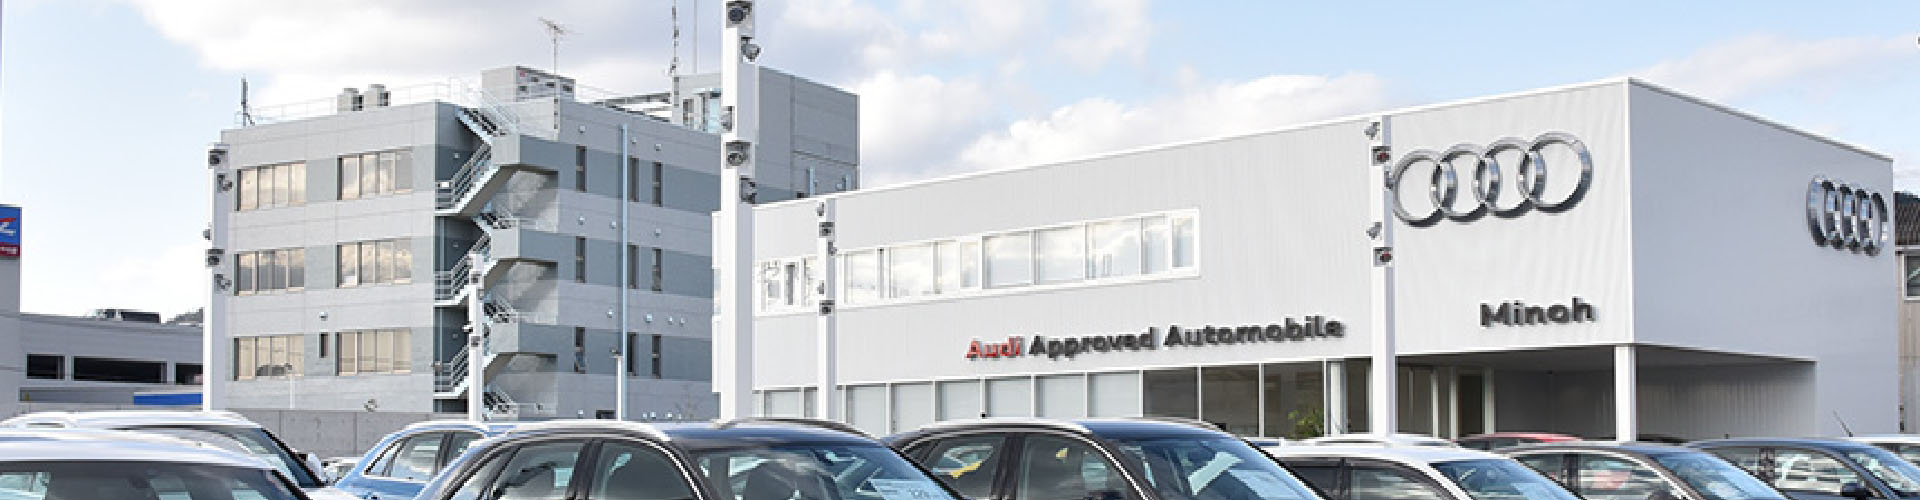 Audi Approved Automobile 箕面 アウディジャパン販売 Audi Japan Sales